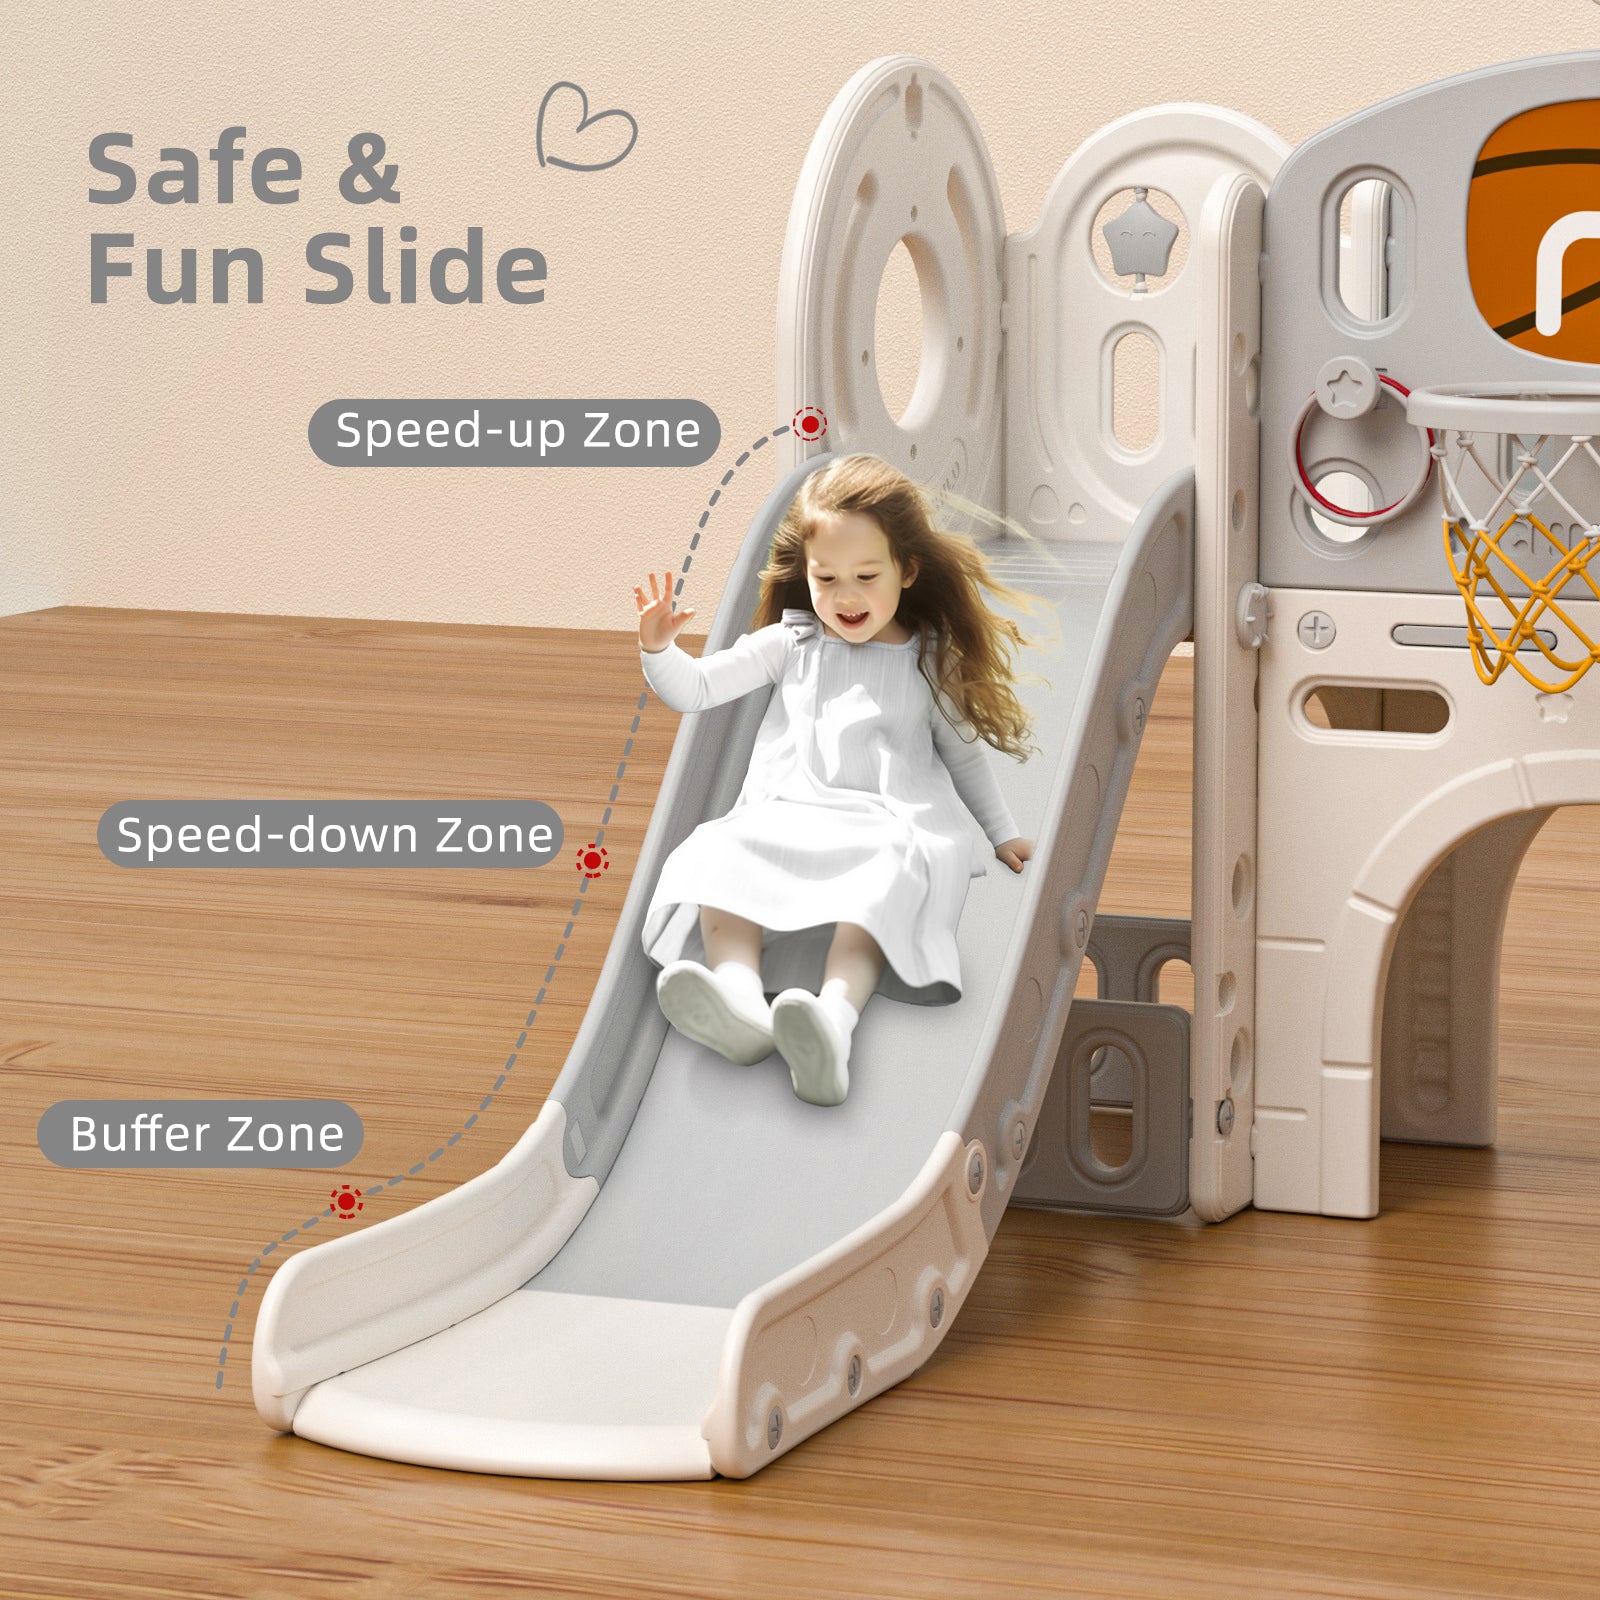 XJD 10 in 1 Toddler Slide with house Indoor and Outdoor Plastic Freestanding Slide, Gray